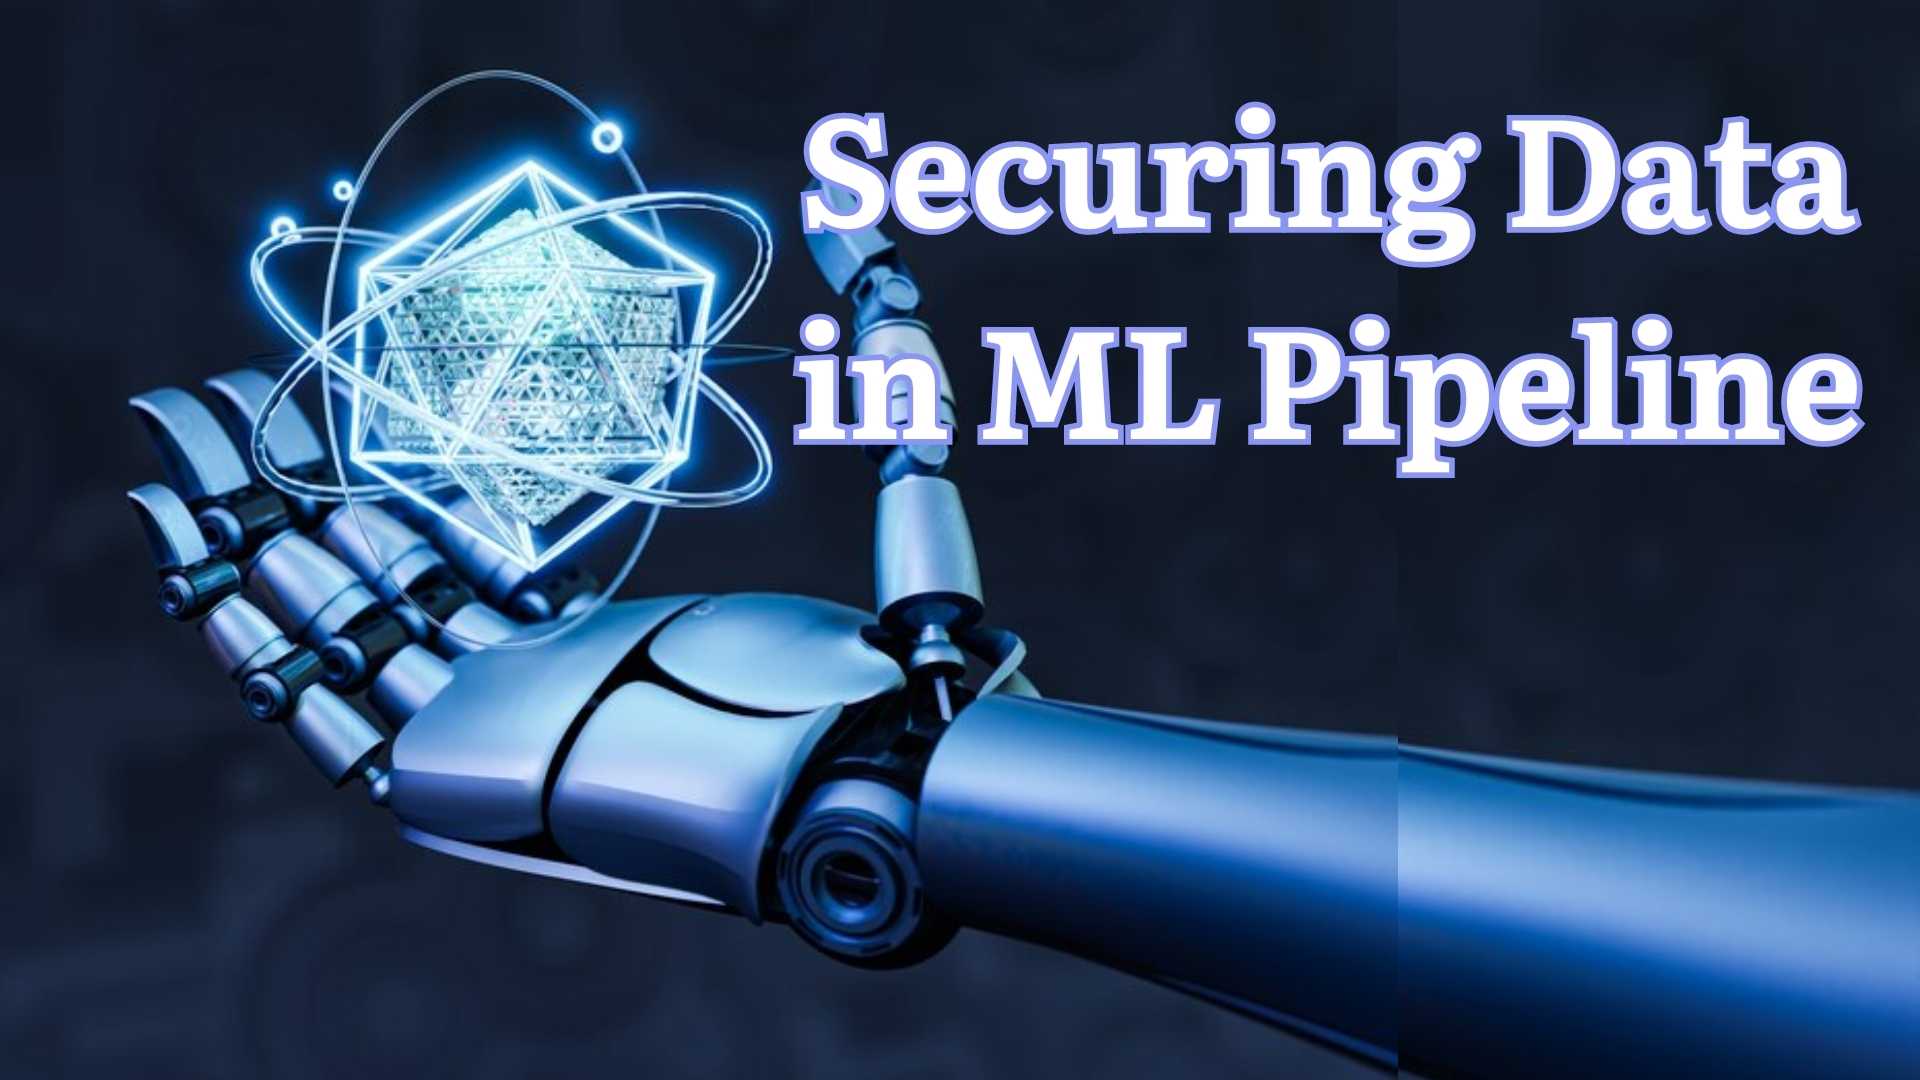 ML Pipeline